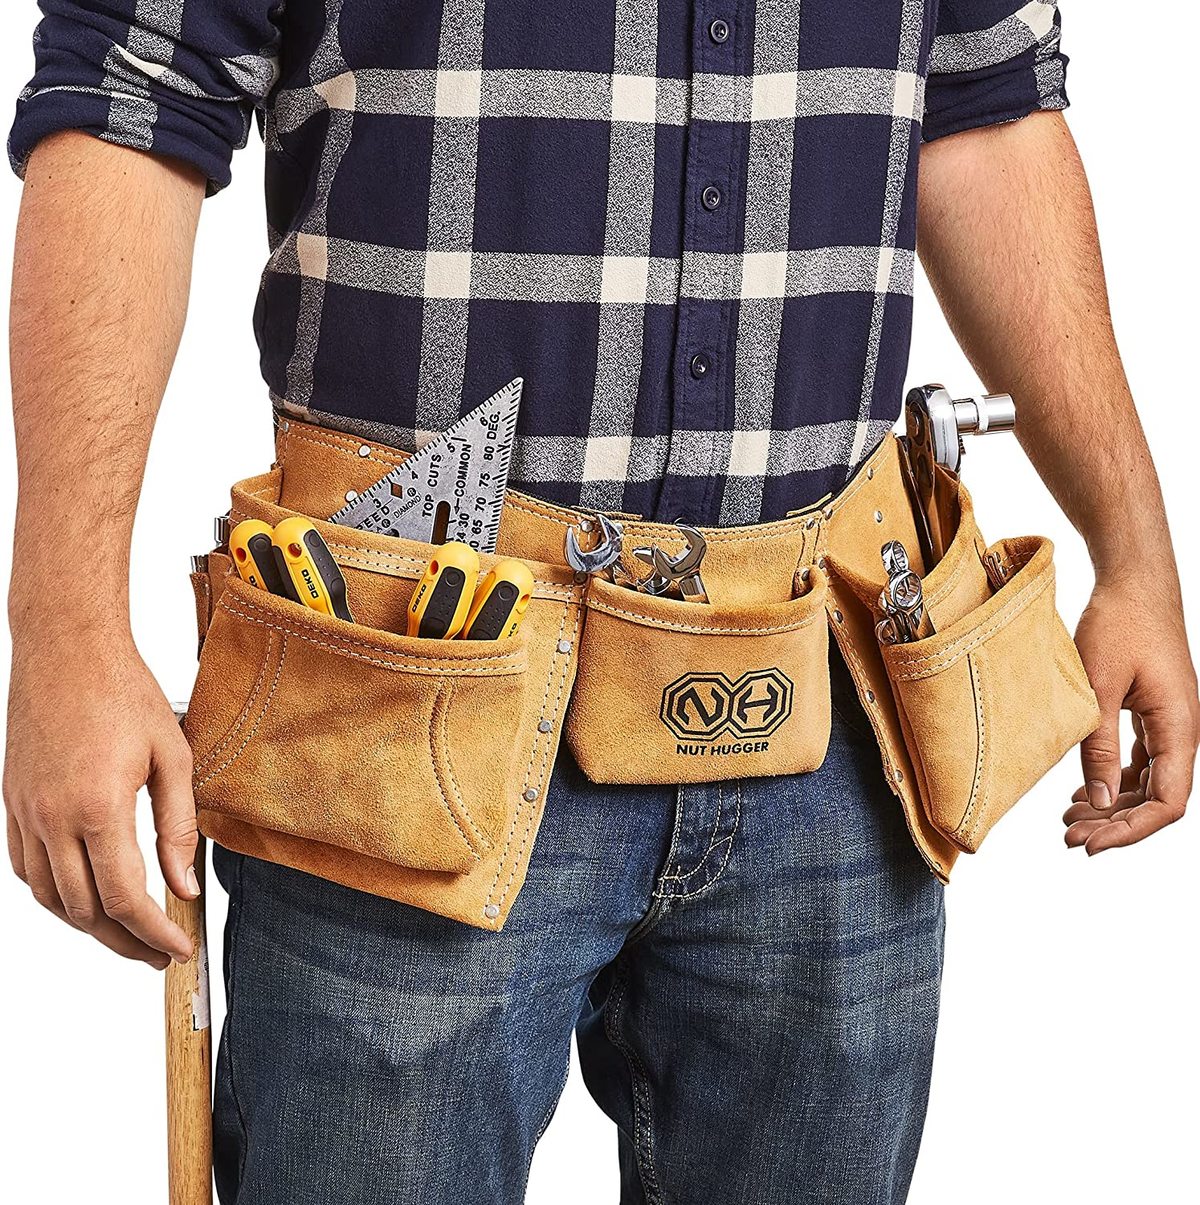 How To Wear A Tool Belt - ManMadeDIY